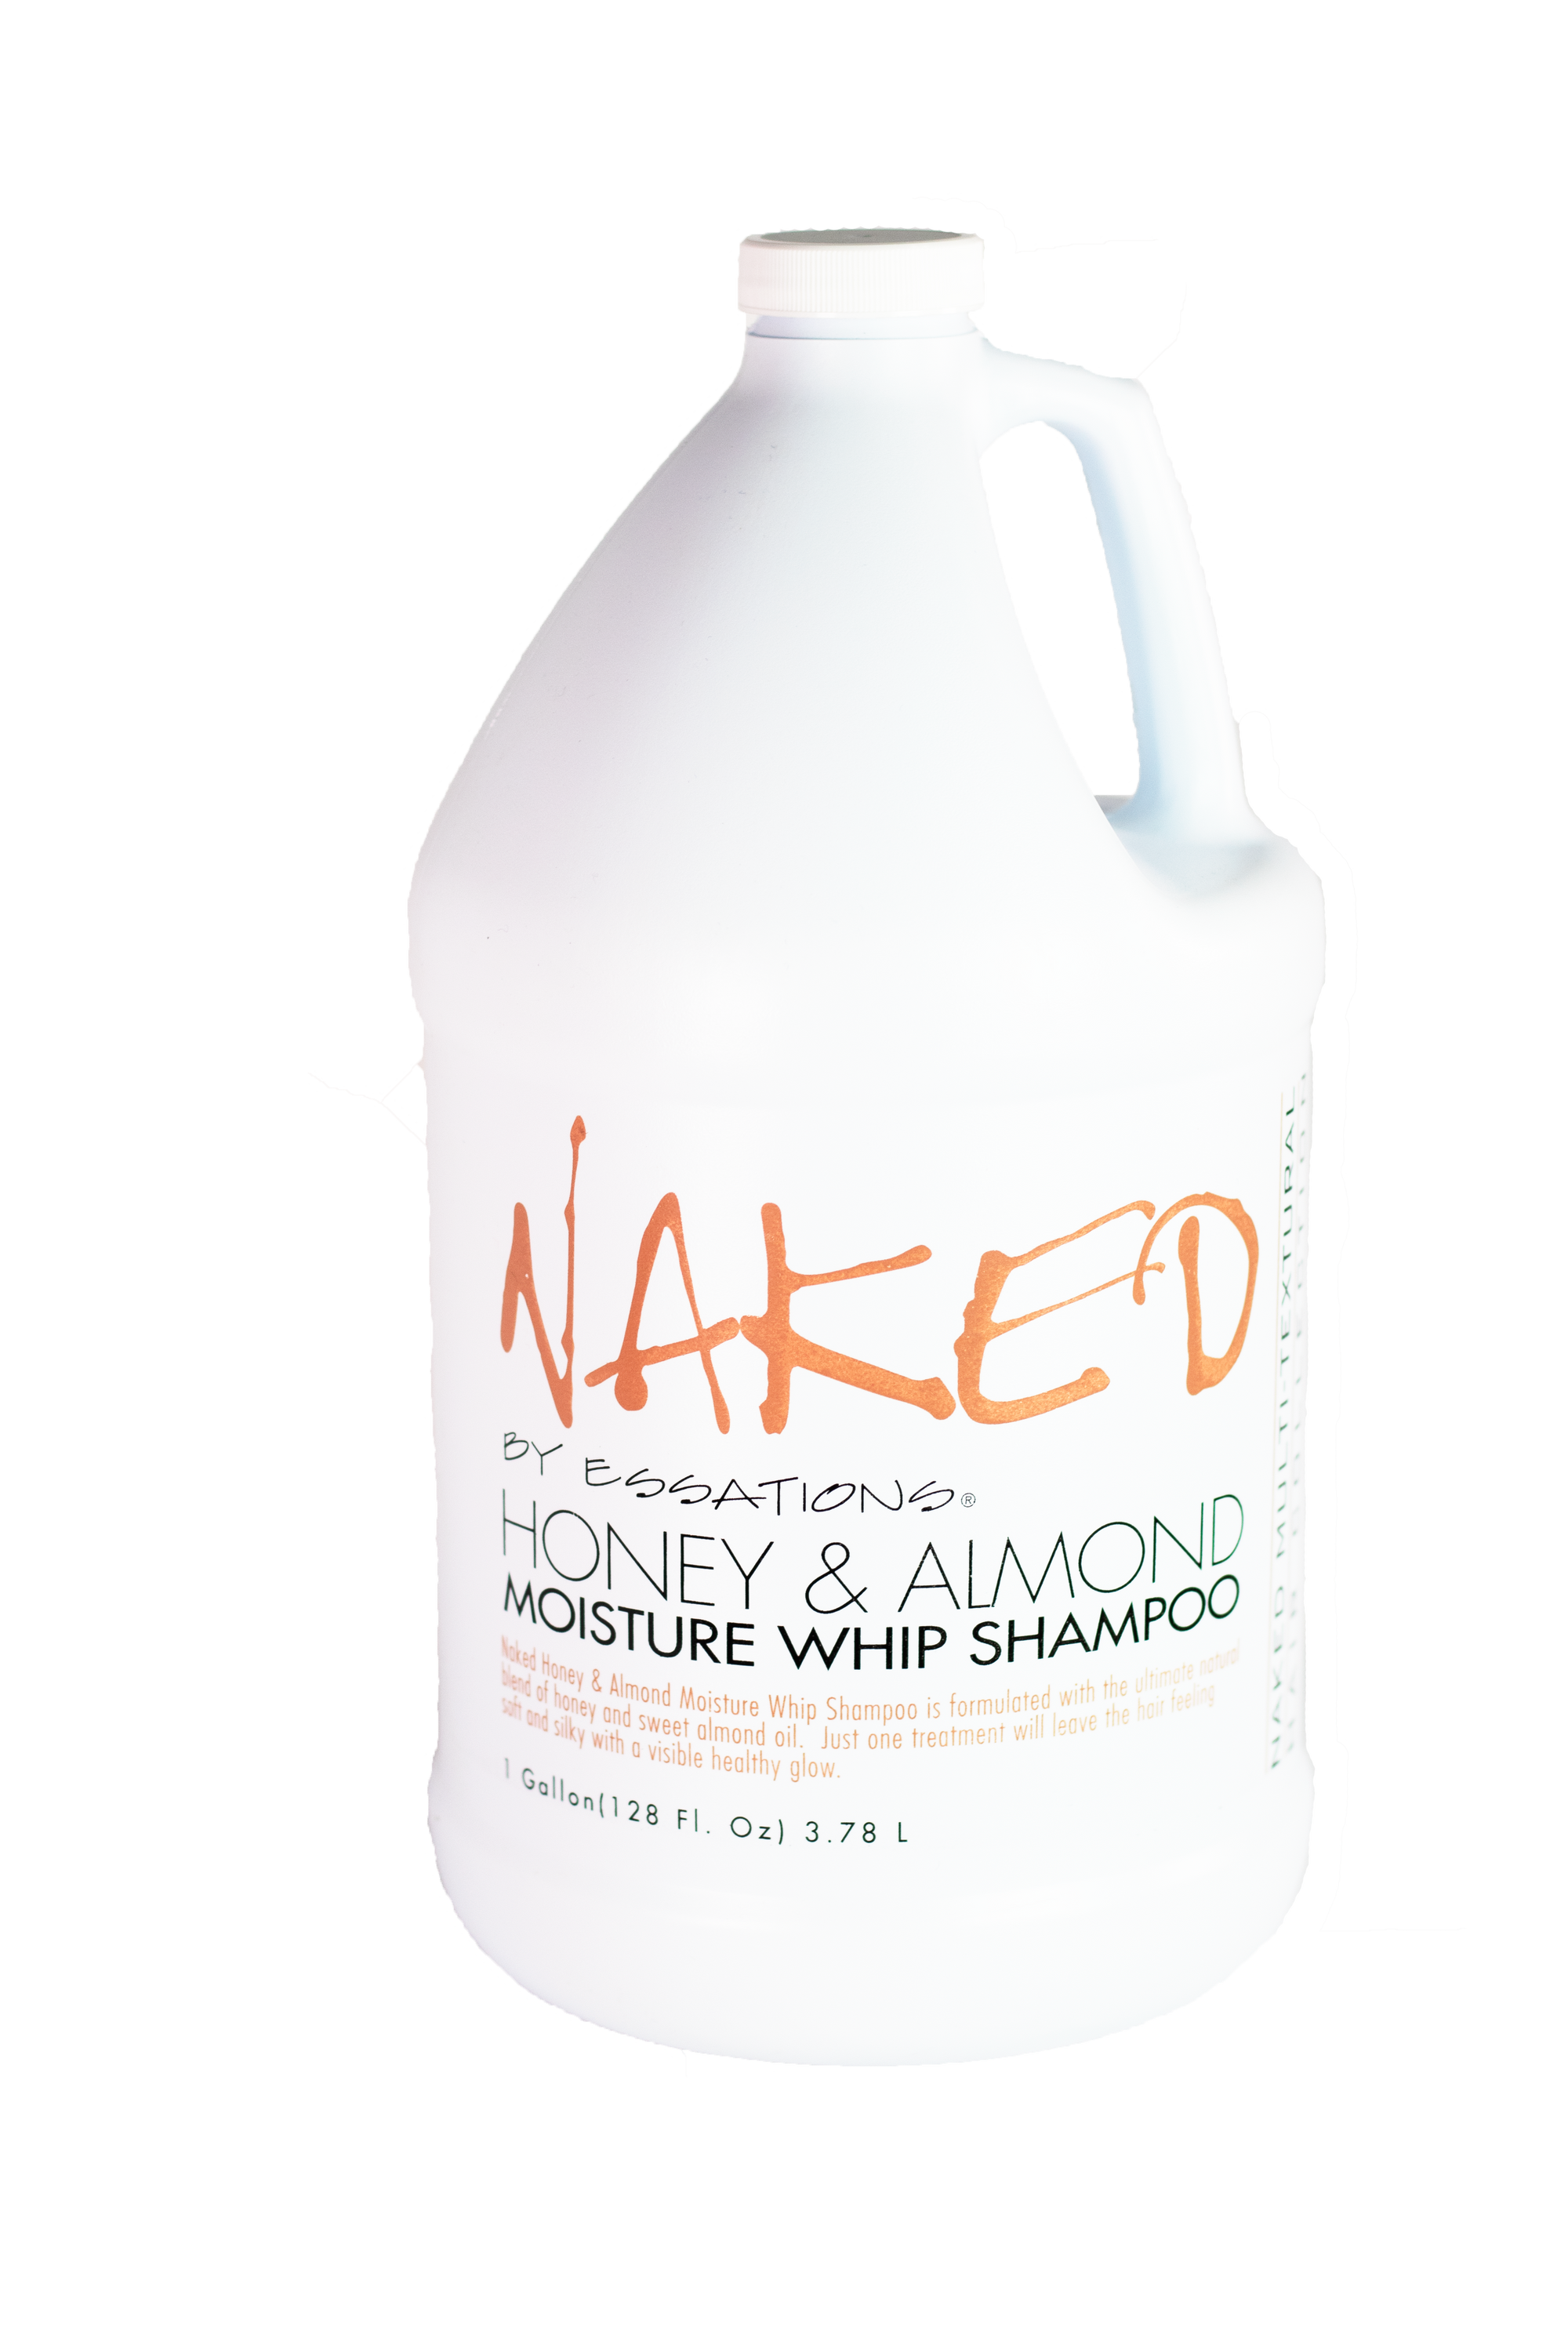 Naked Honey & Almond Moisture Whip Shampoo - EssationsPro